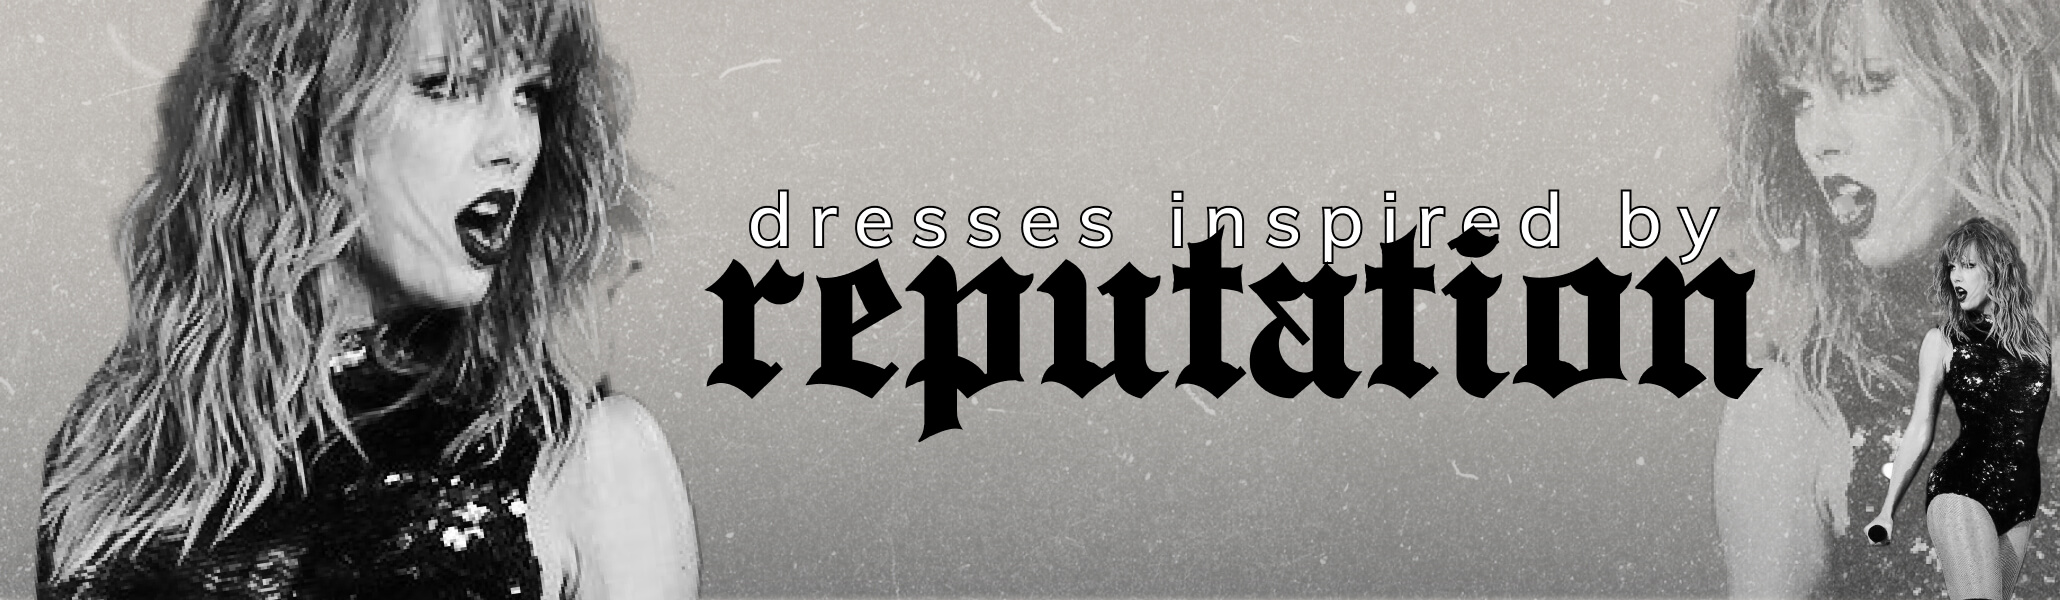 Shop Taylor swift reputation album inspired dresses